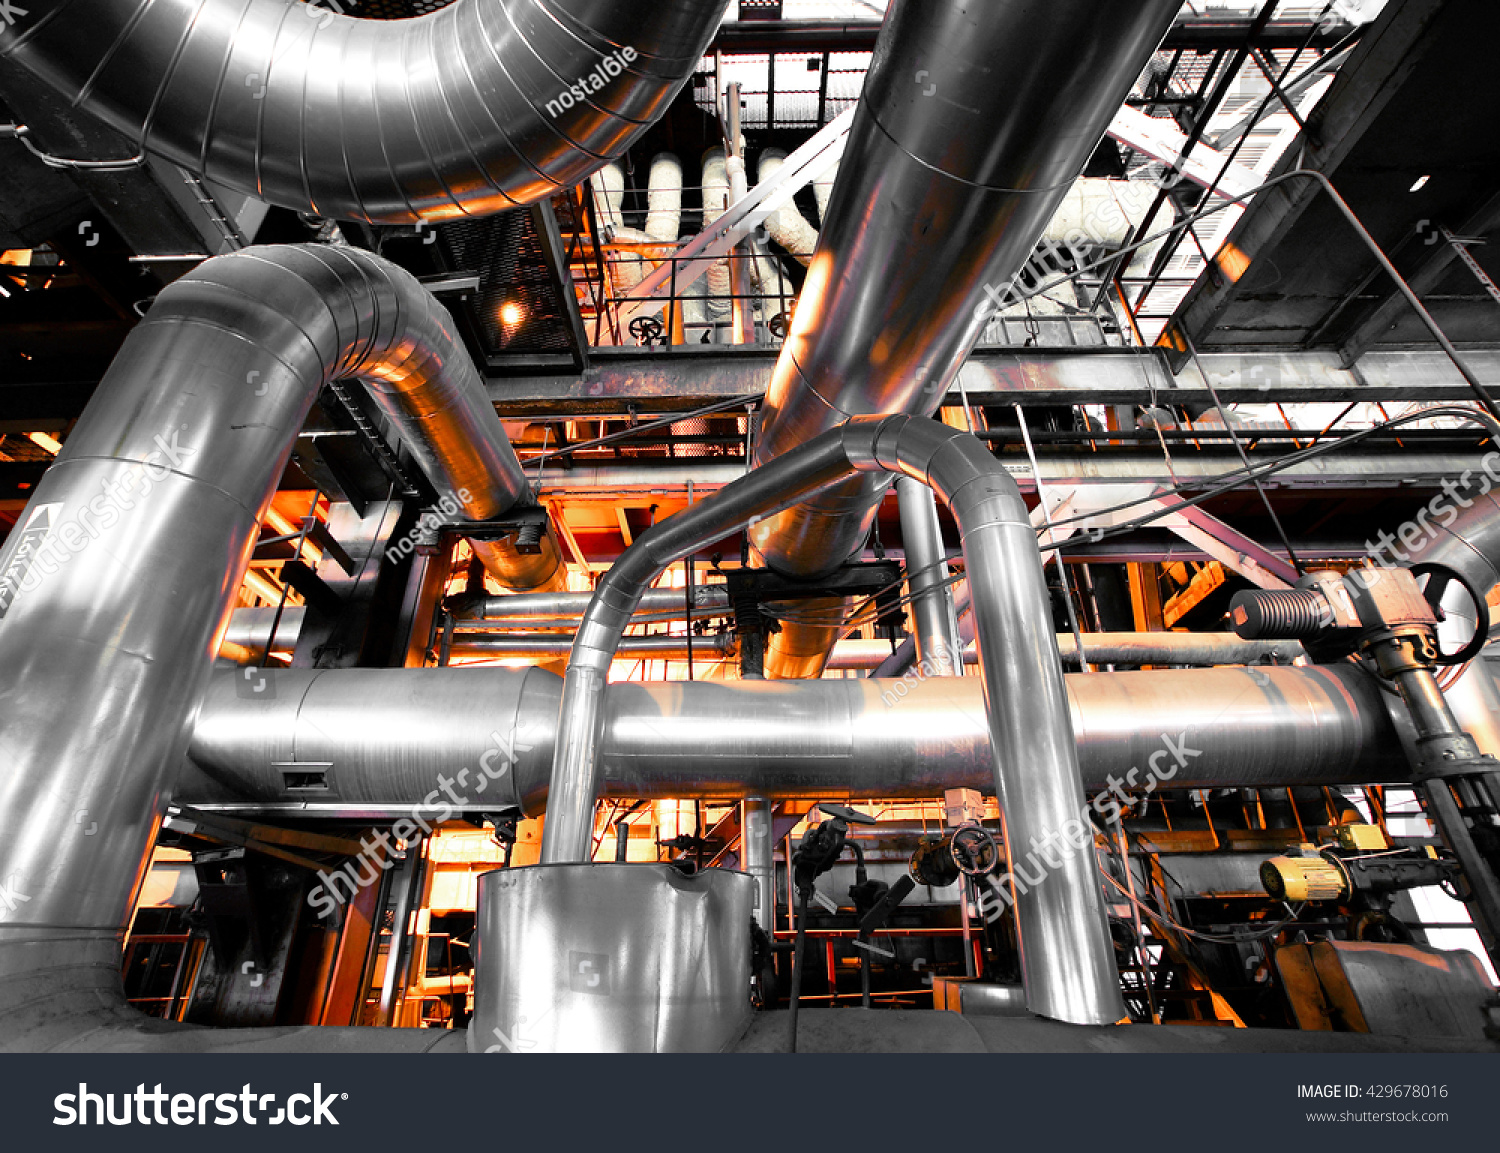 Industrial zone, Steel pipelines and equipment #429678016